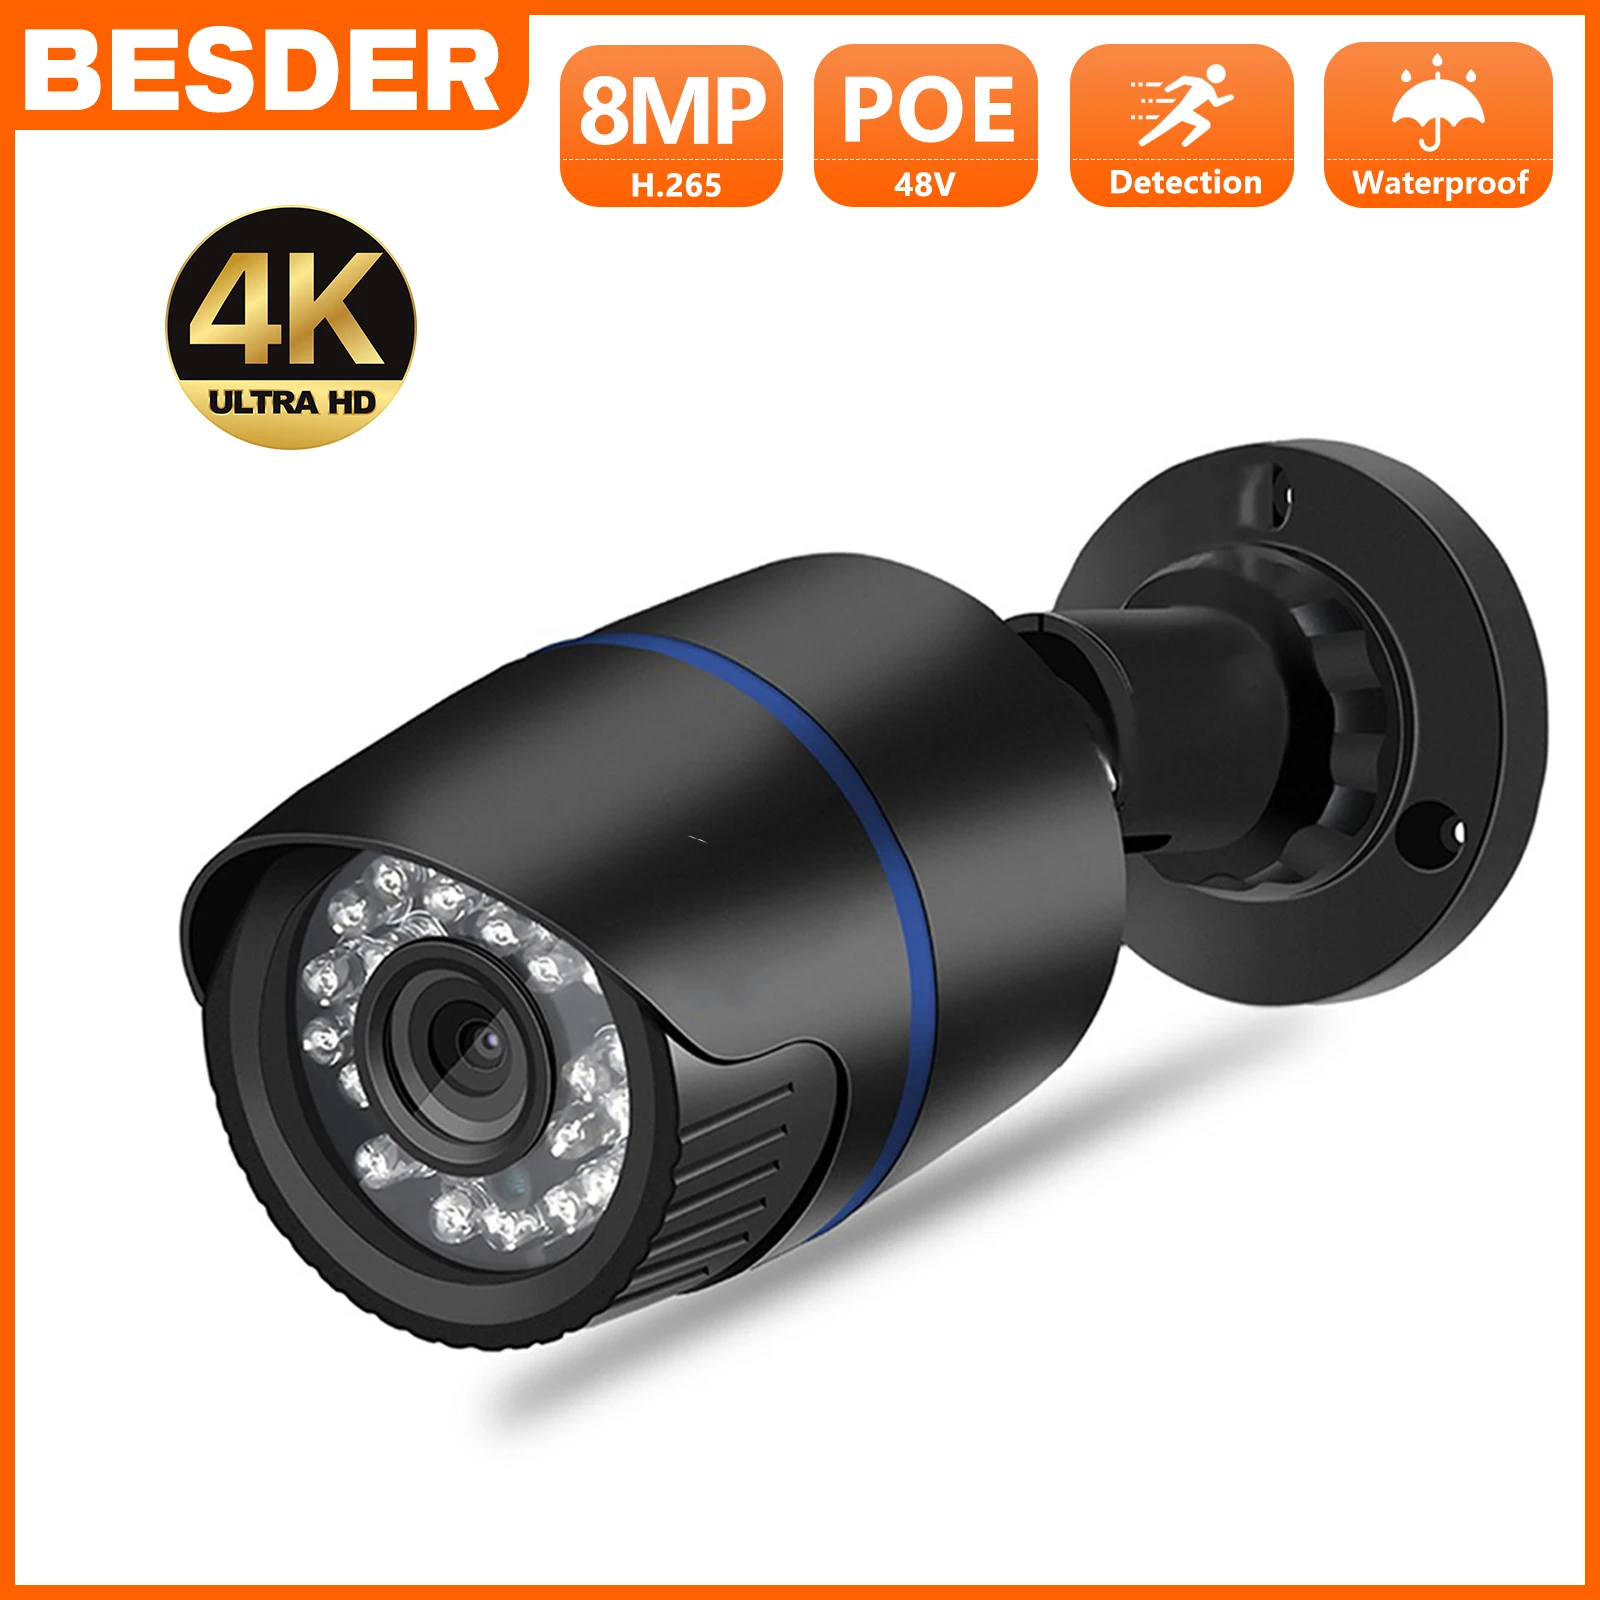 Görüntü /Besder-8mp-4k-ip-kamera-2-8-mm-geniş-açı-kamera_imgs/1802-1_uploads.jpeg